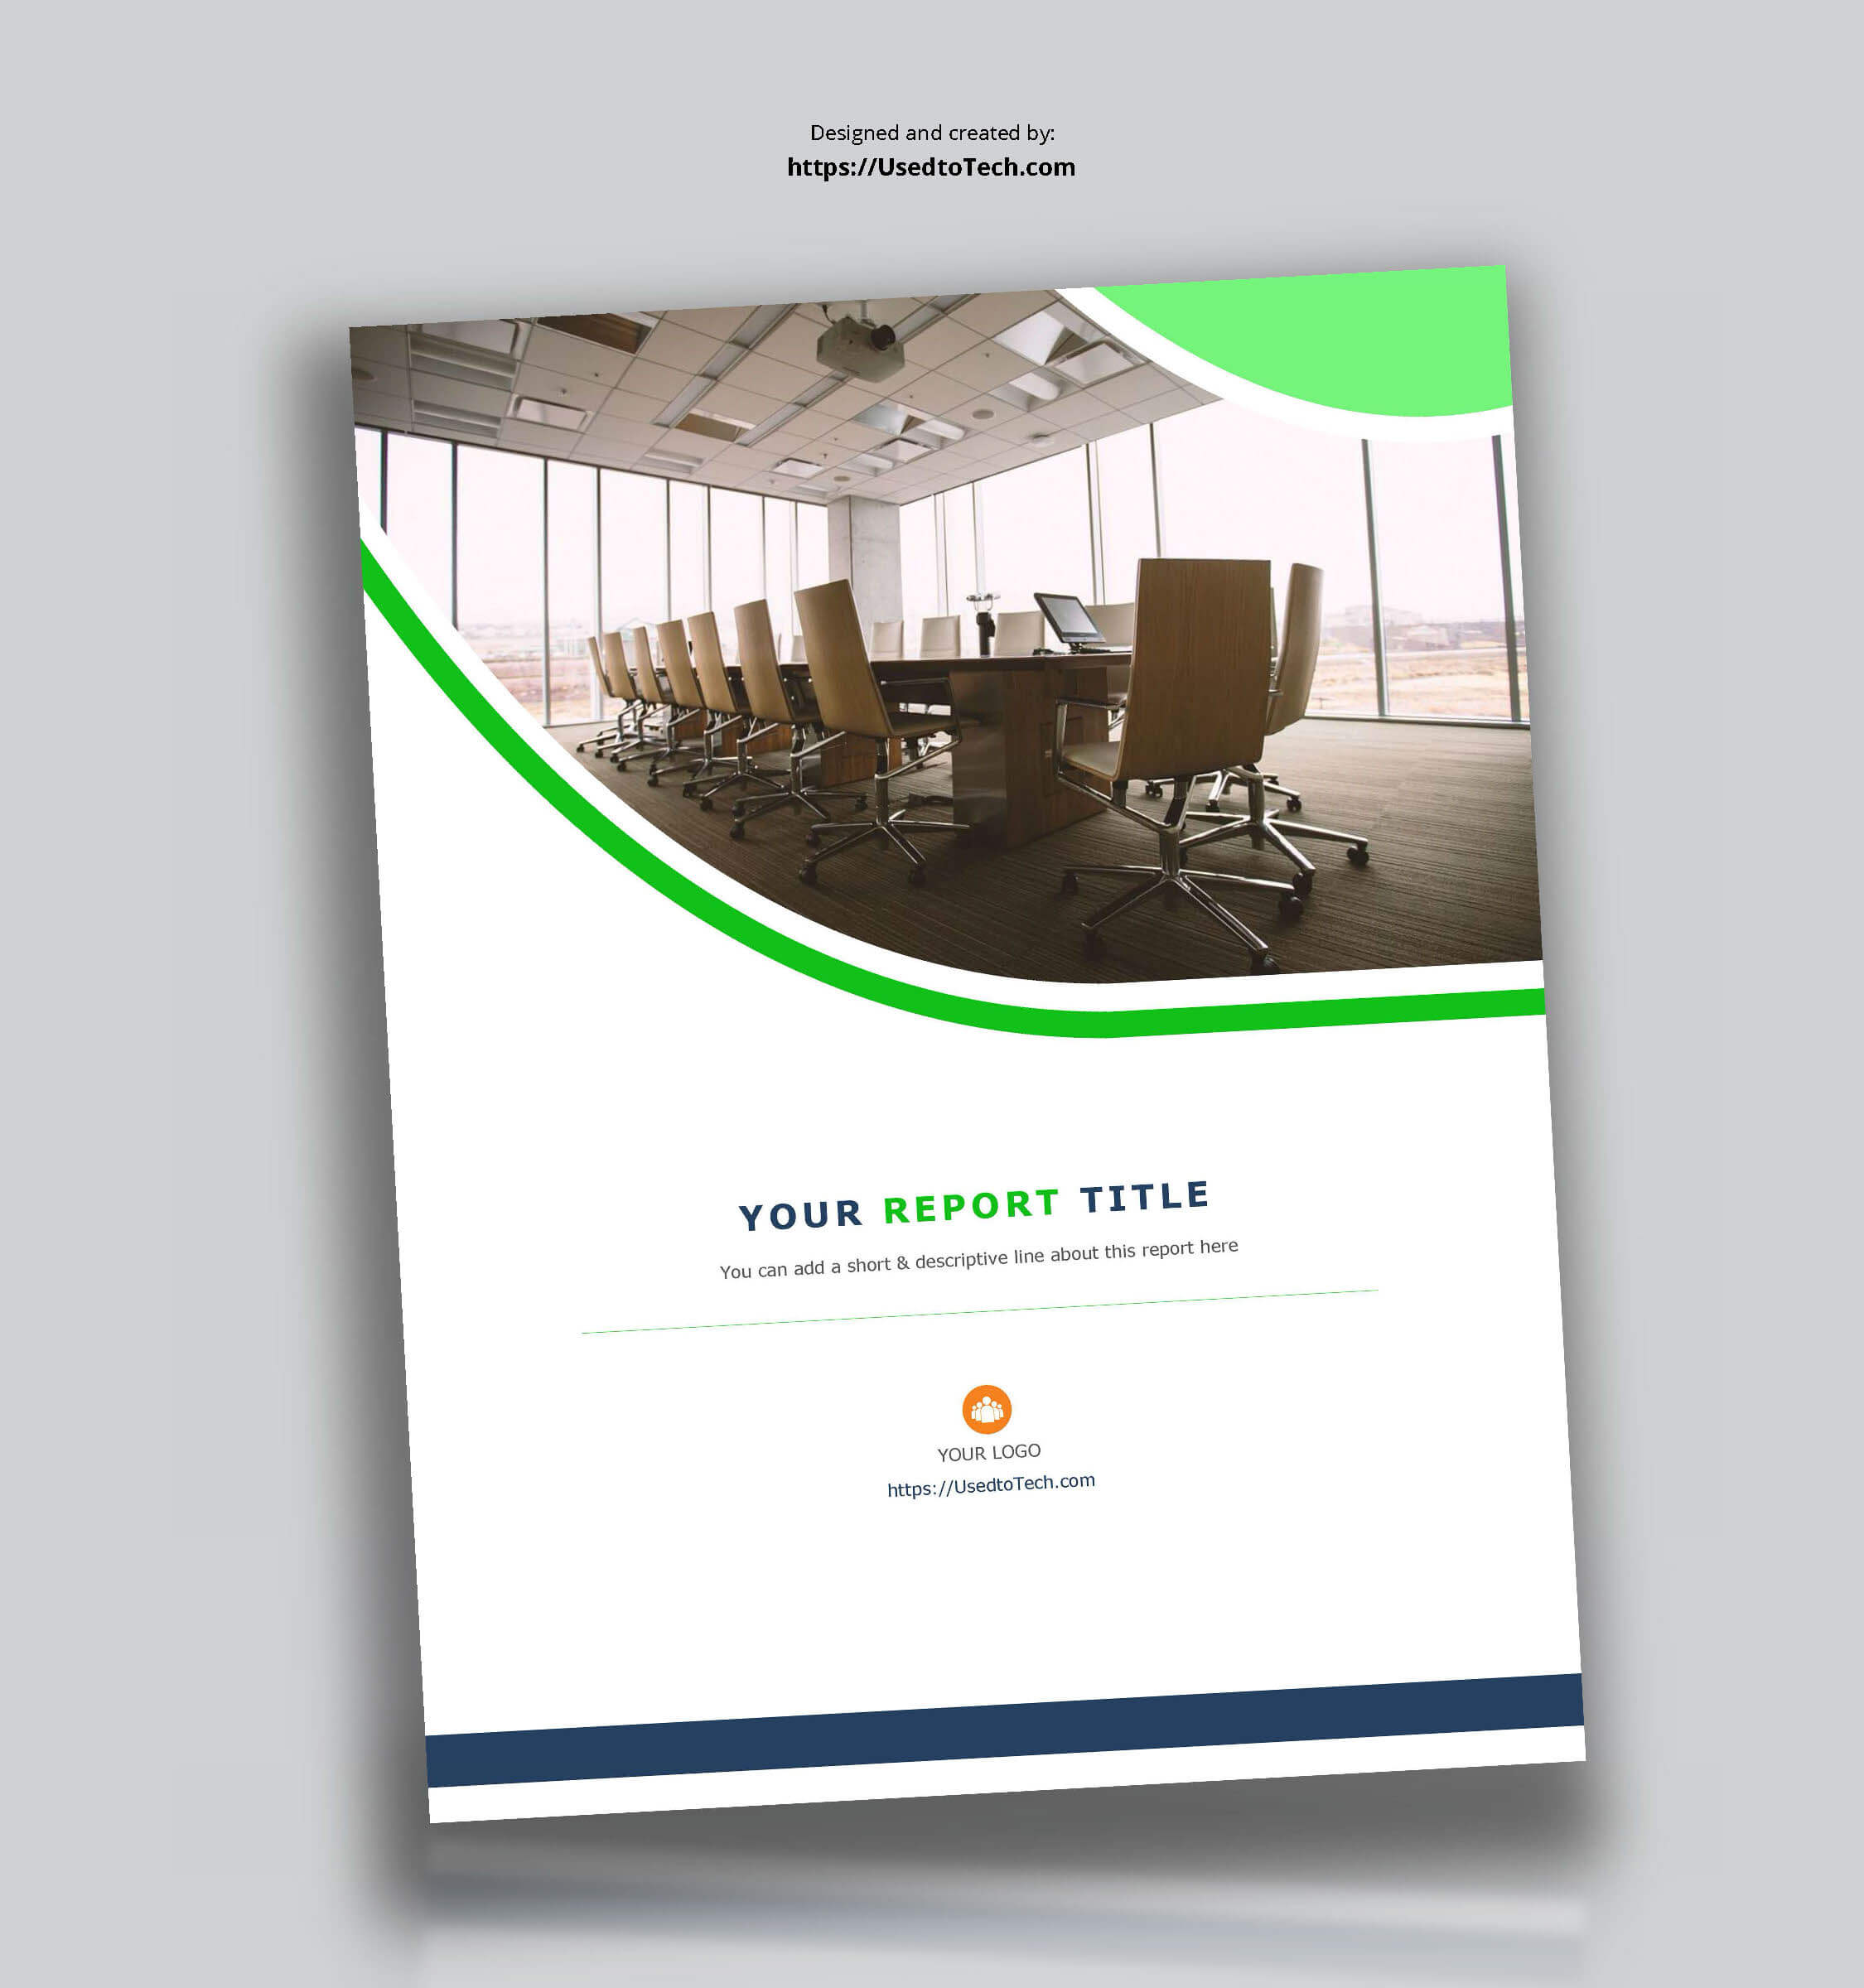 Corporate Report Design Template In Microsoft Word – Used To Within Microsoft Word Templates Reports